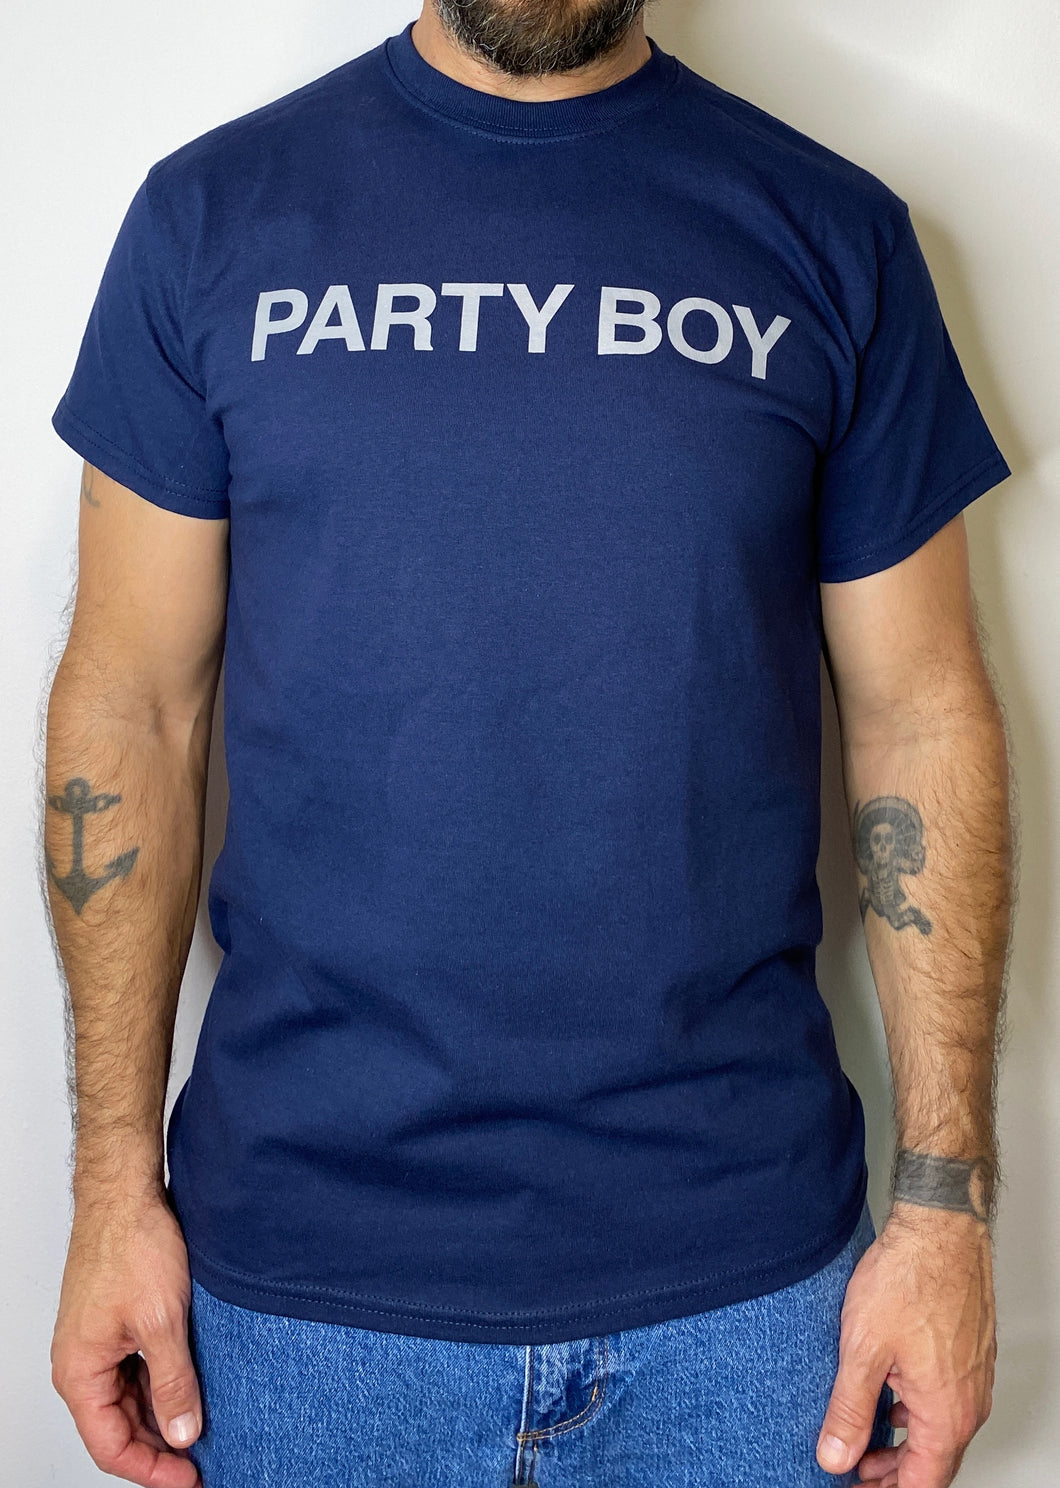 PARTY BOY T-Shirt Navy